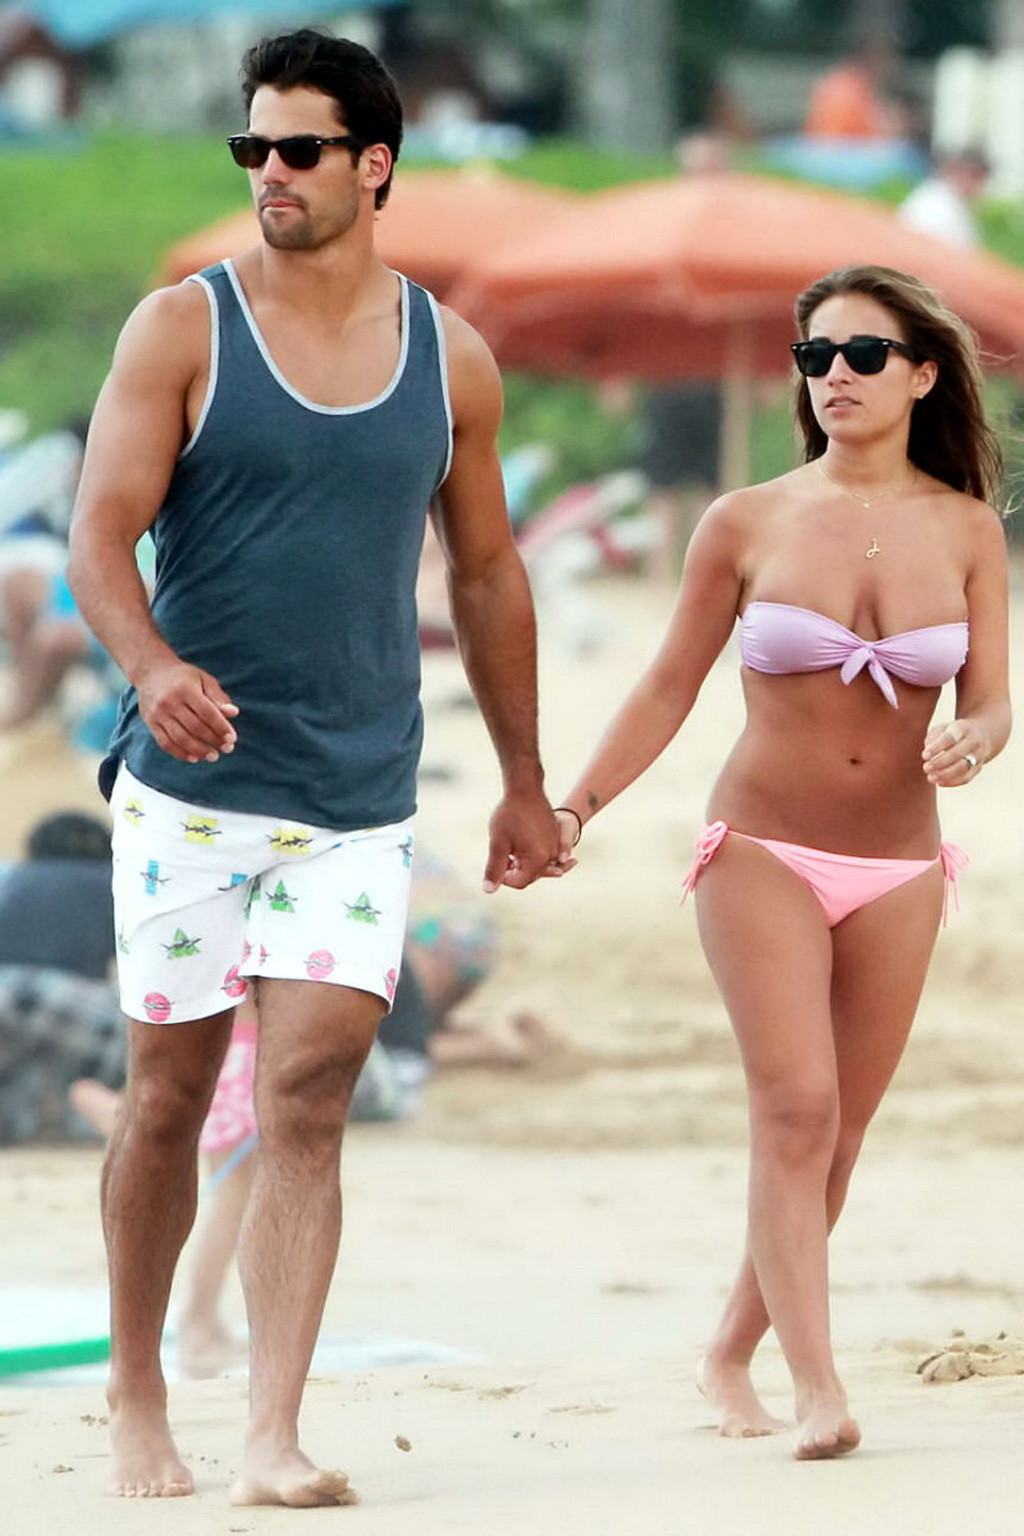 Jessie james en bikini tube sur une plage hawaïenne.
 #75225969